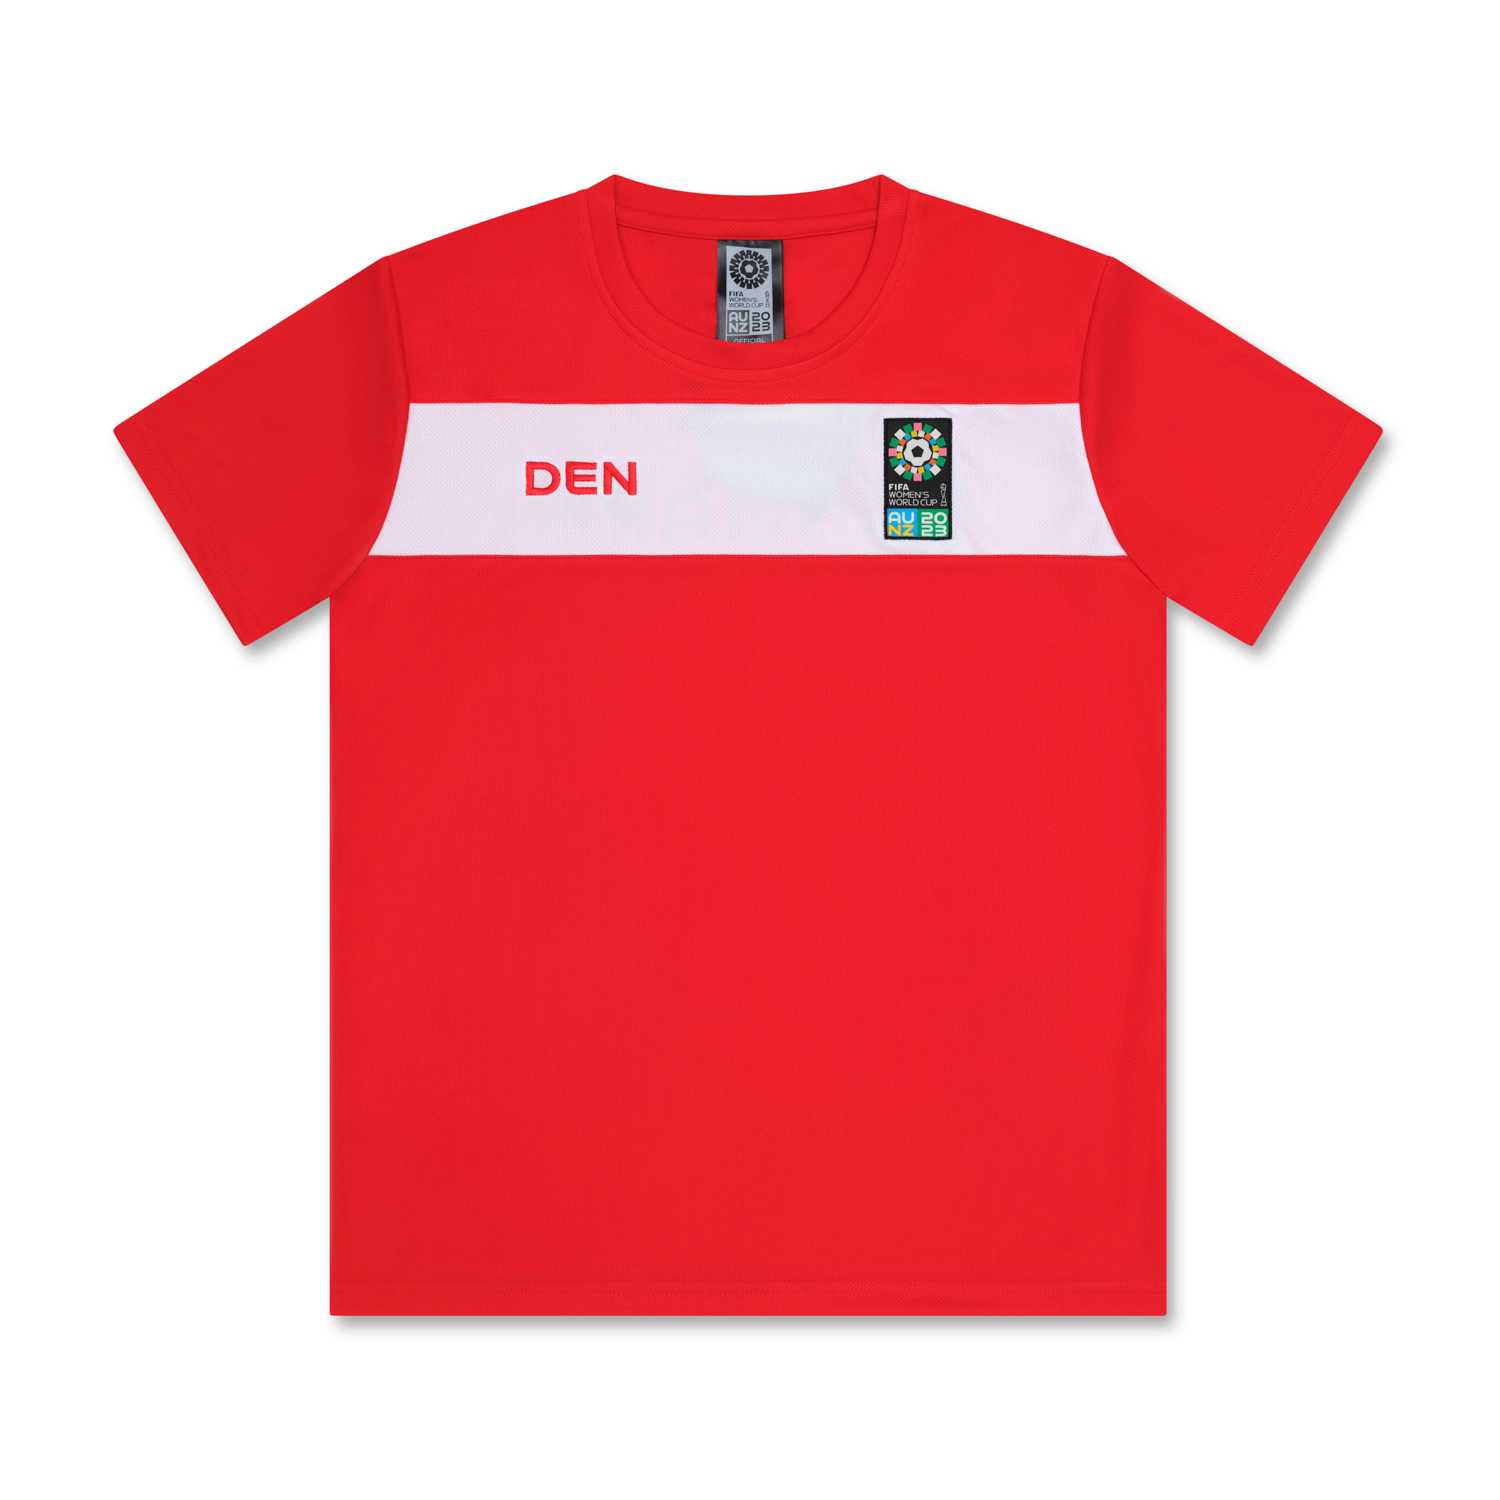 Denmark Women's World Cup 2023 Red T-Shirt - Unisex